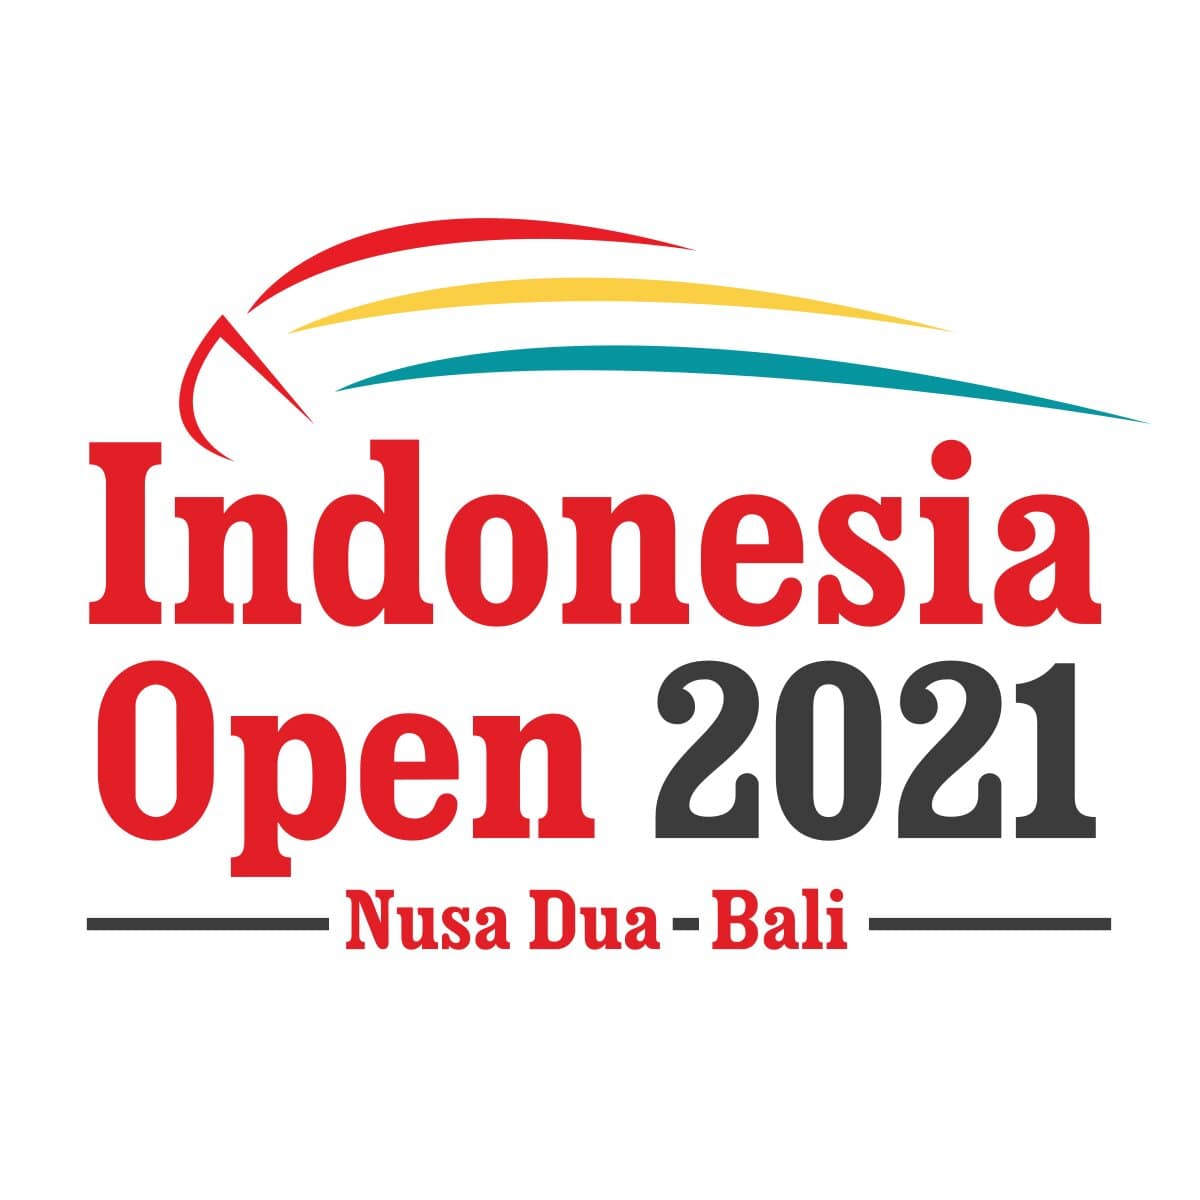 indonesia open 2021